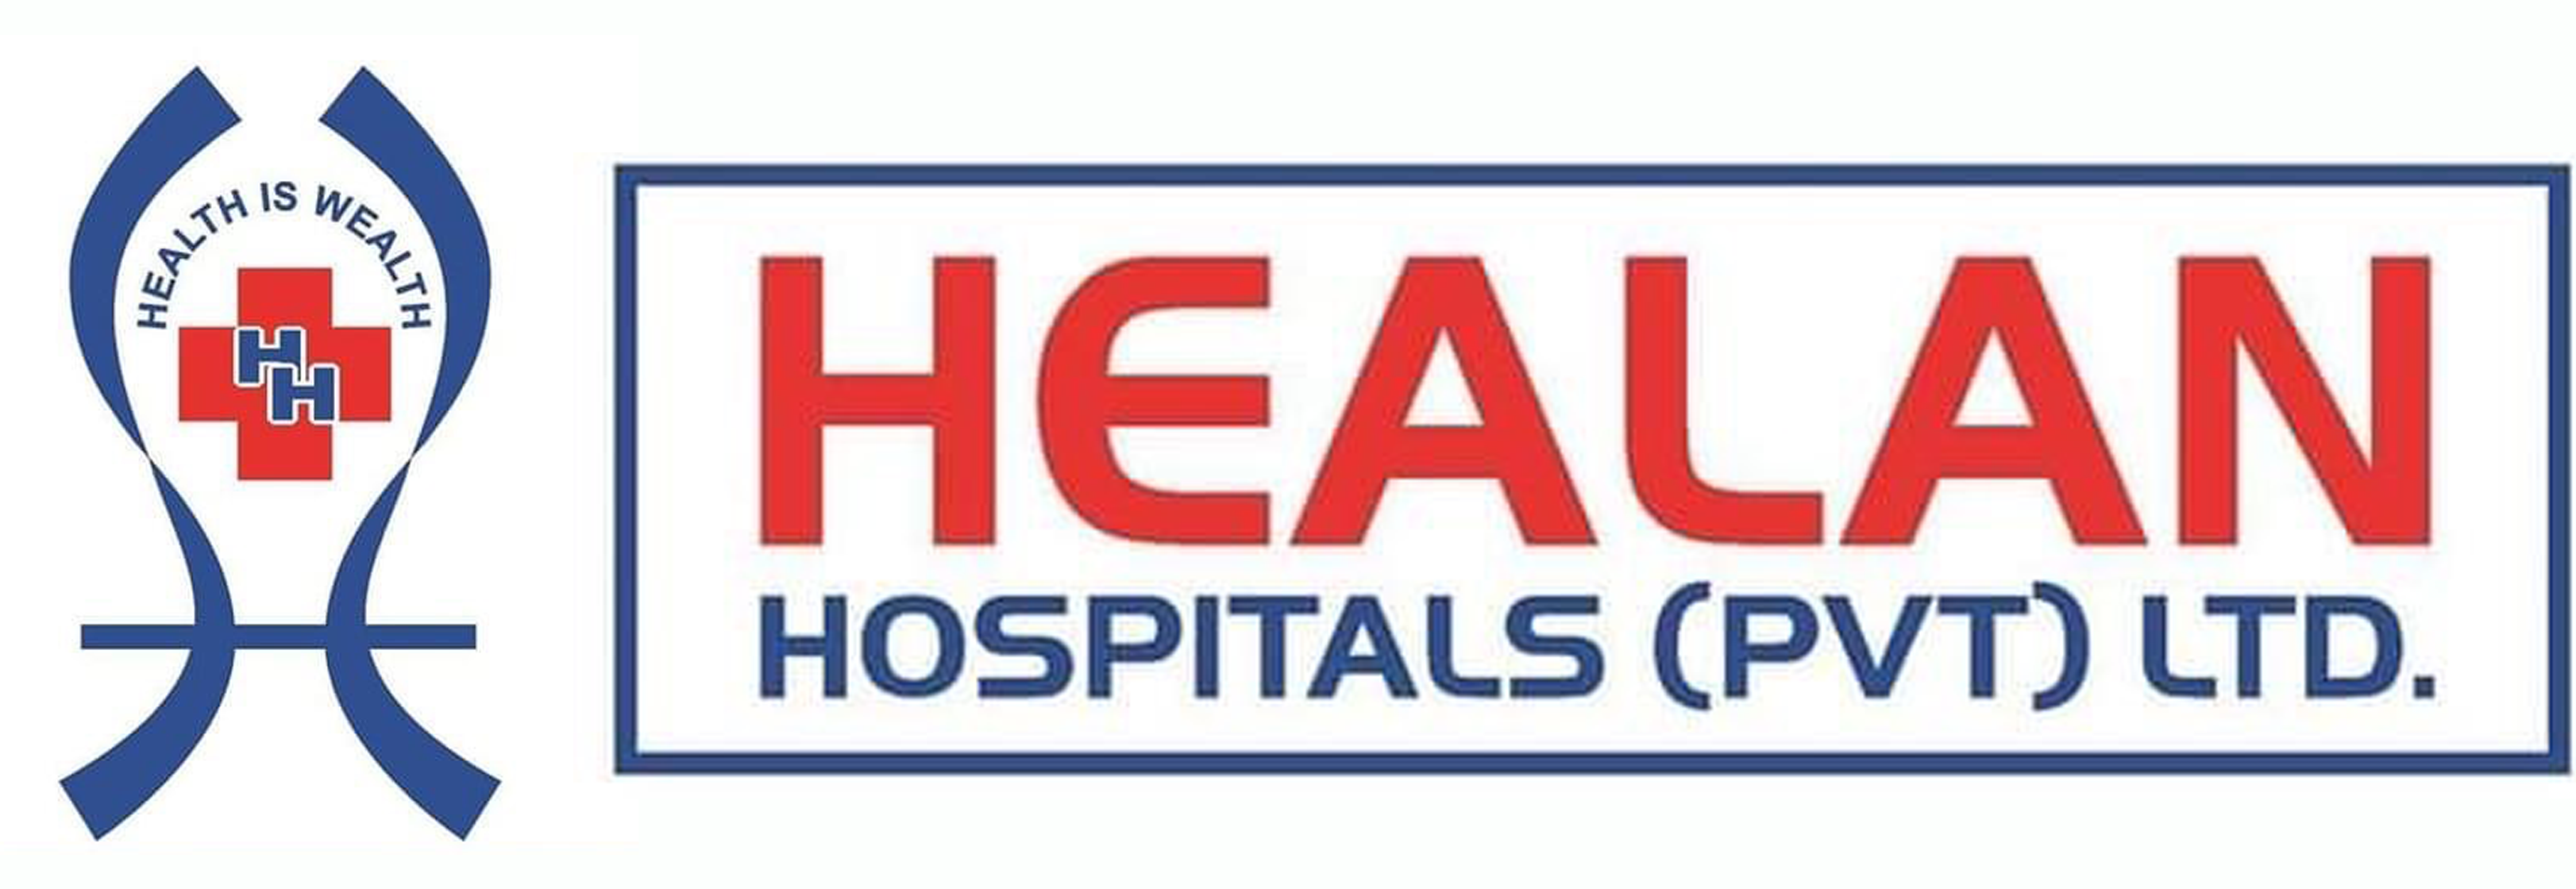 Healan Hospital